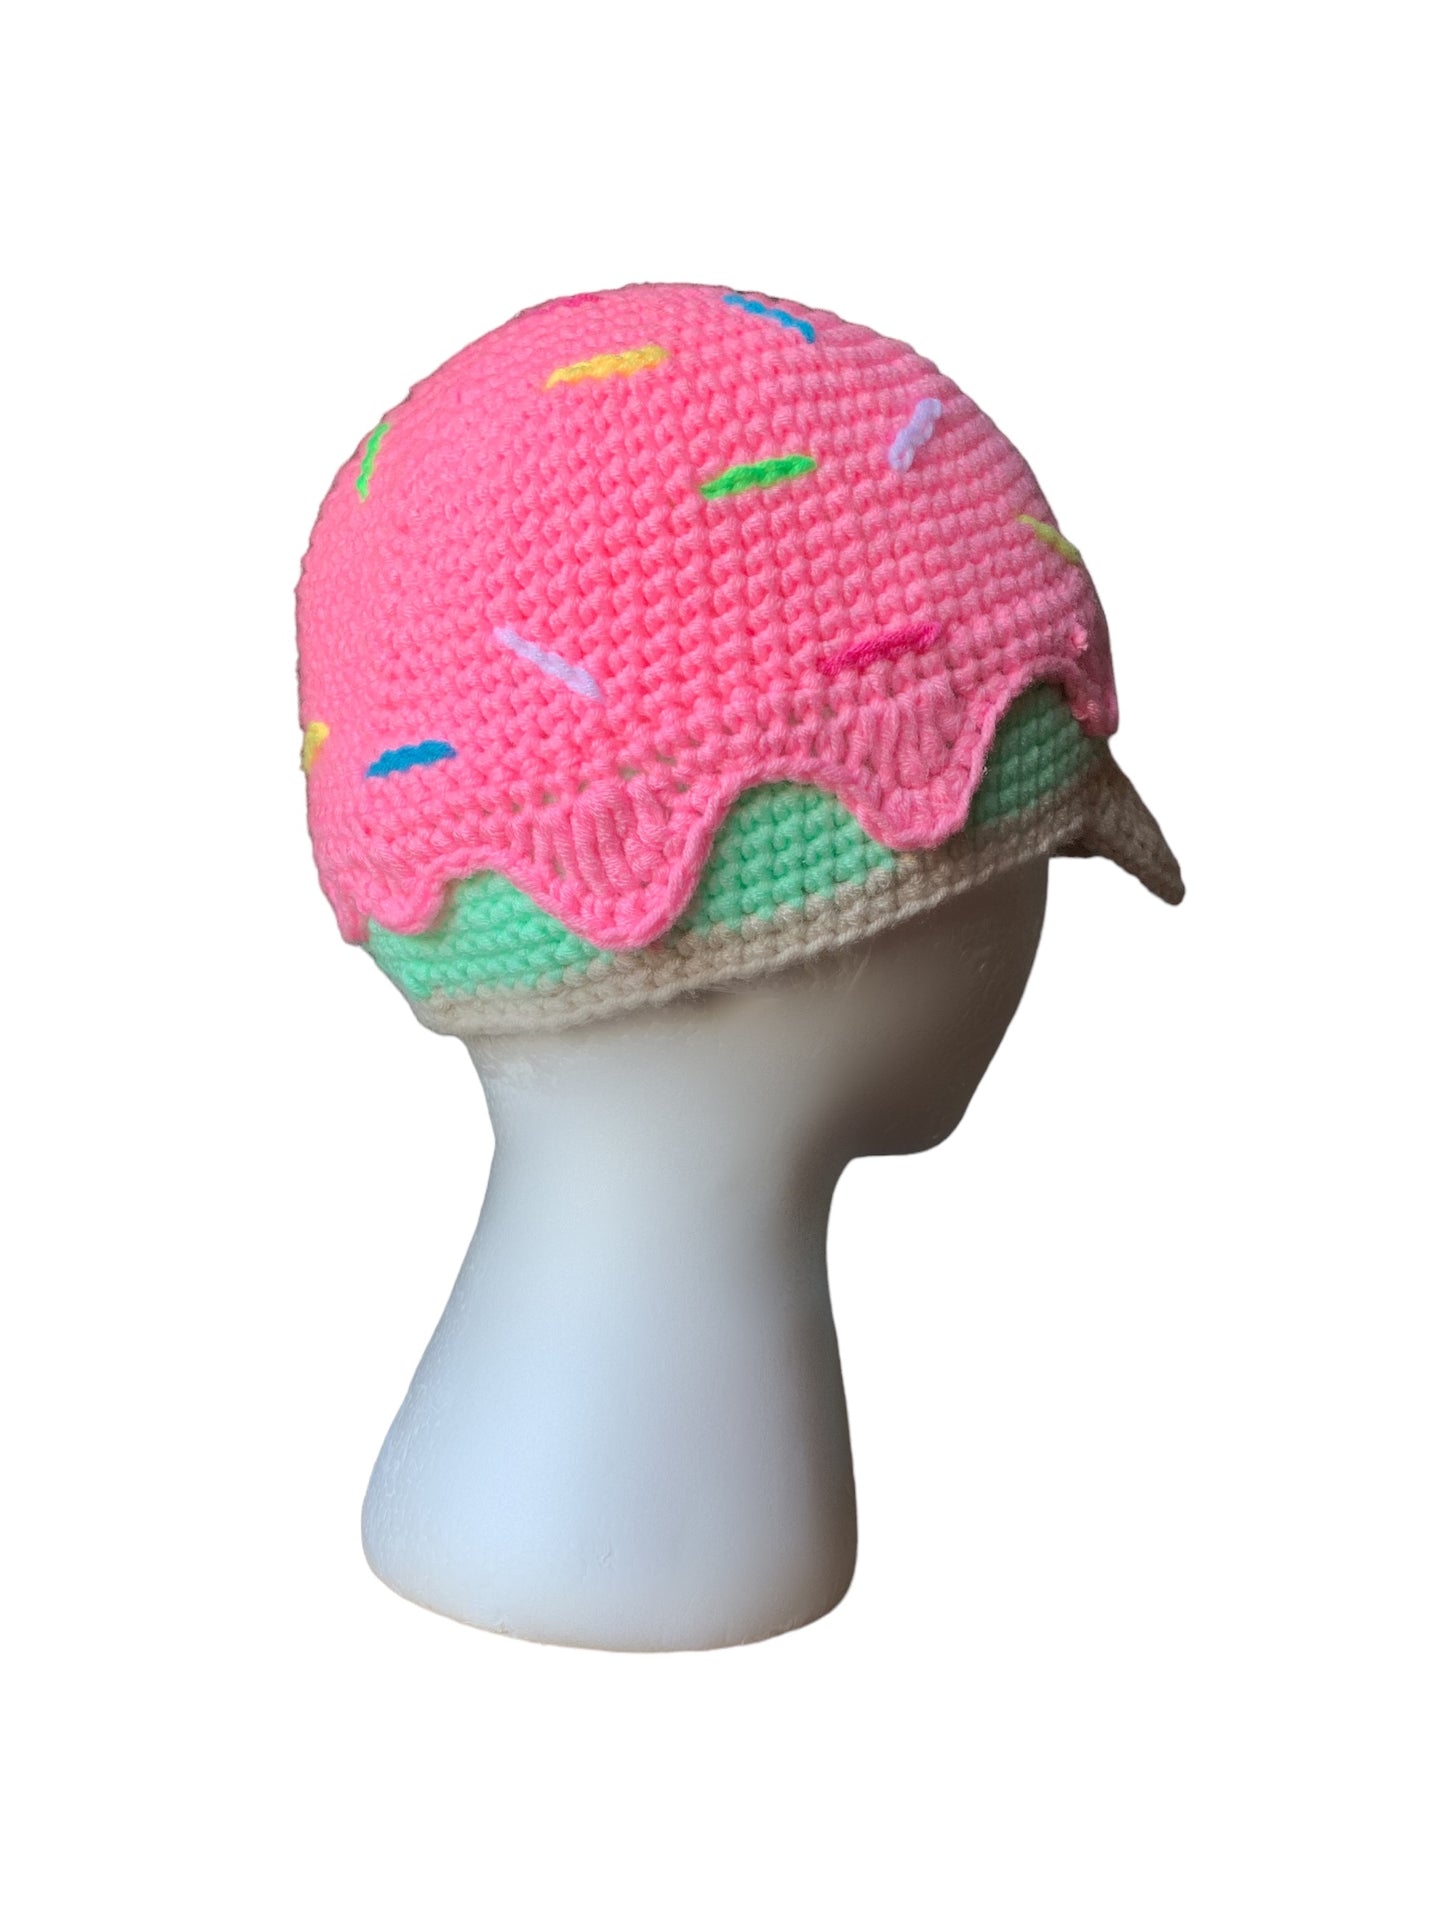 The SPLAT Hat - Crochet Baseball Hat